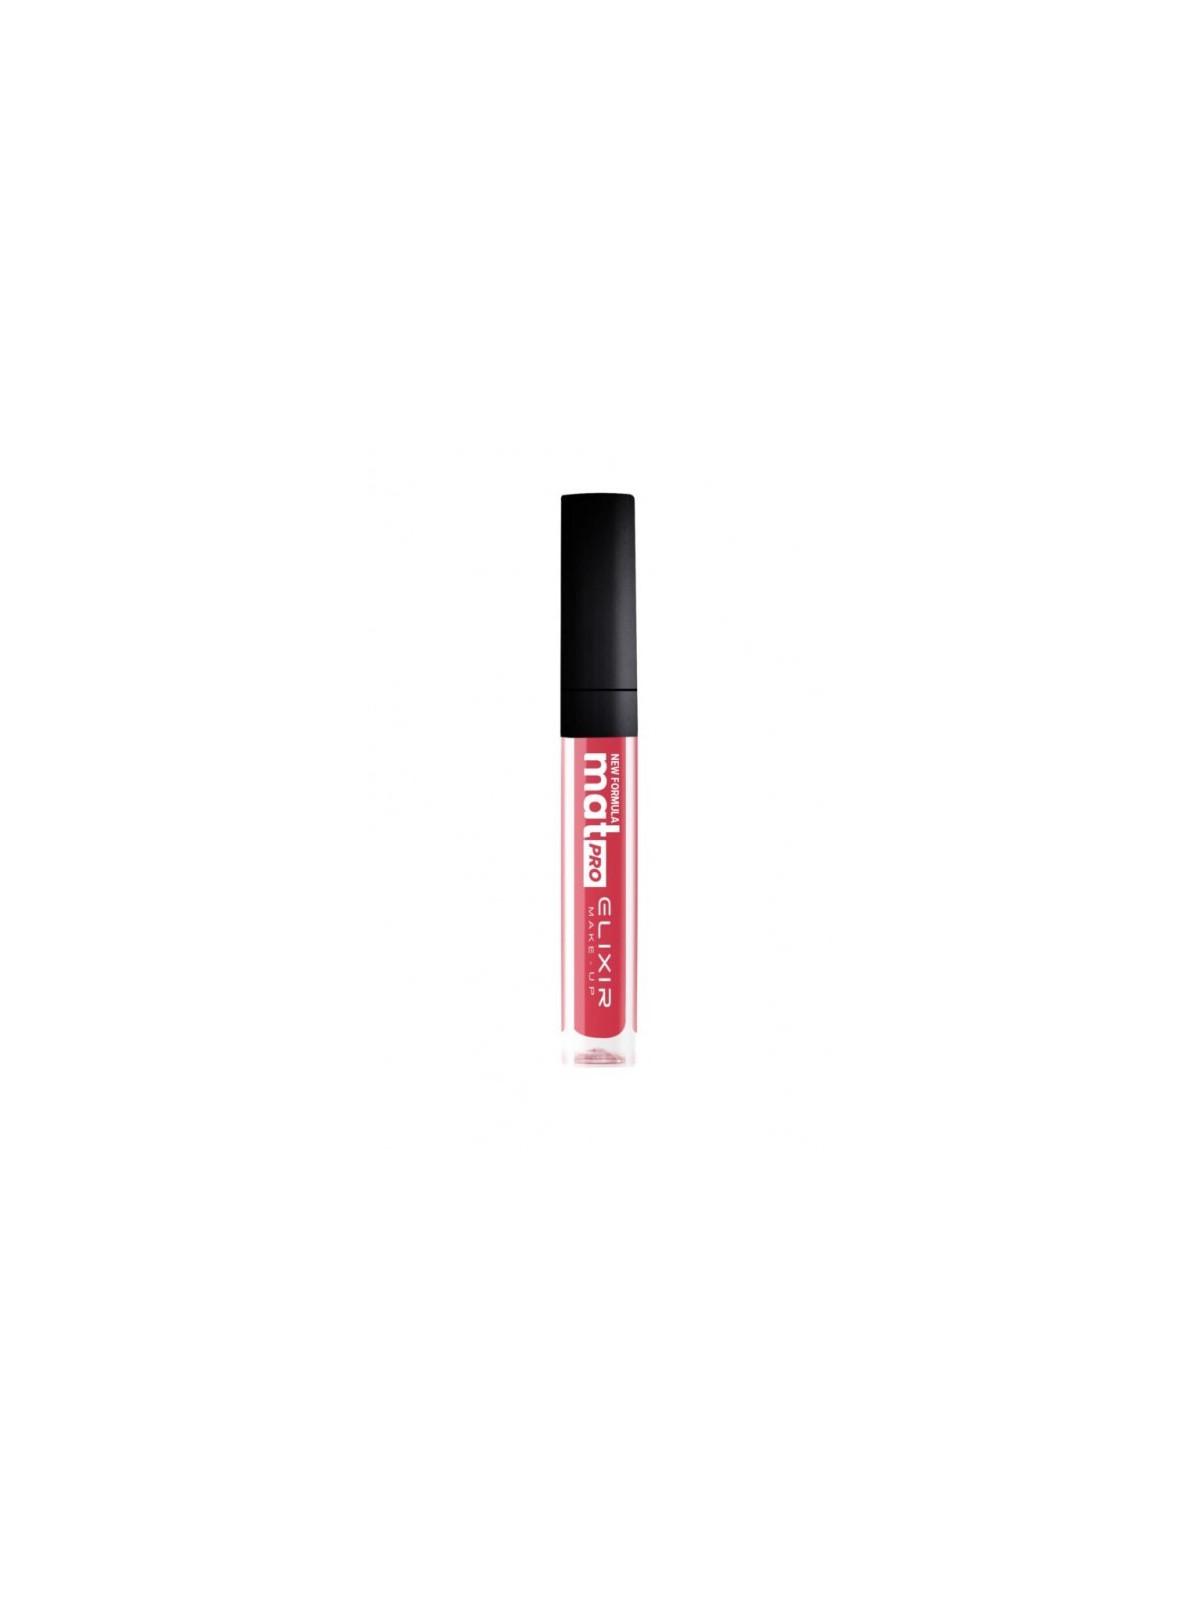 Elixir Make-up liquid lip matt pro5,50 €